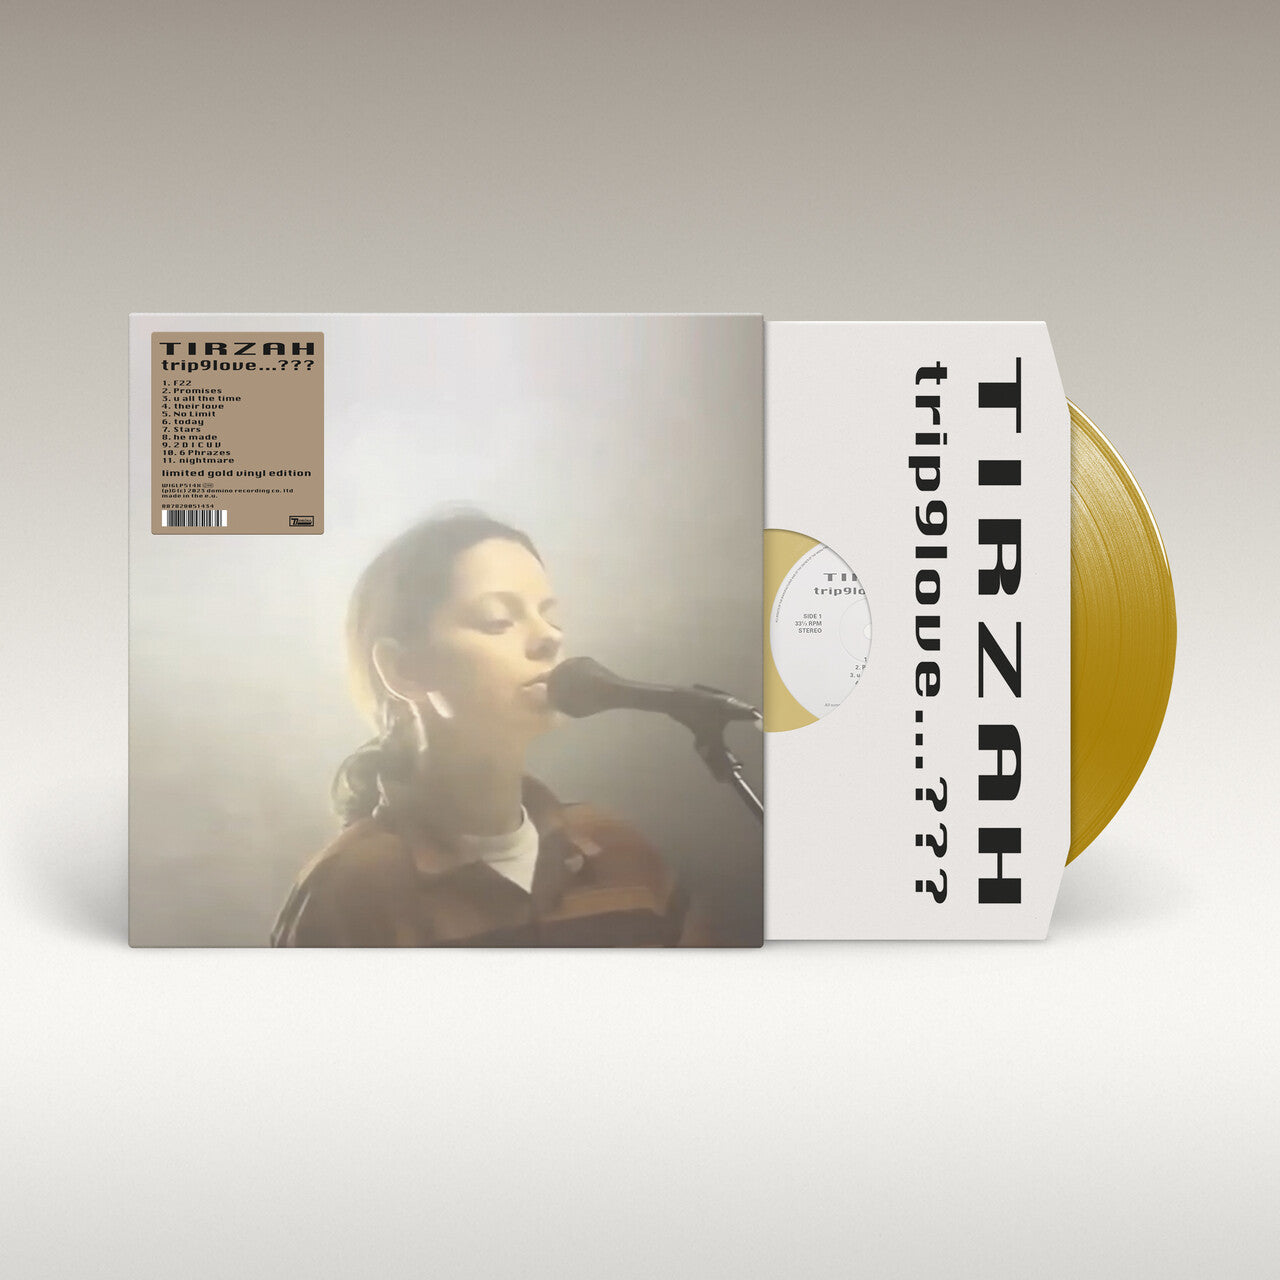 Tirzah - trip9love...??? Limited Gold Vinyl LP